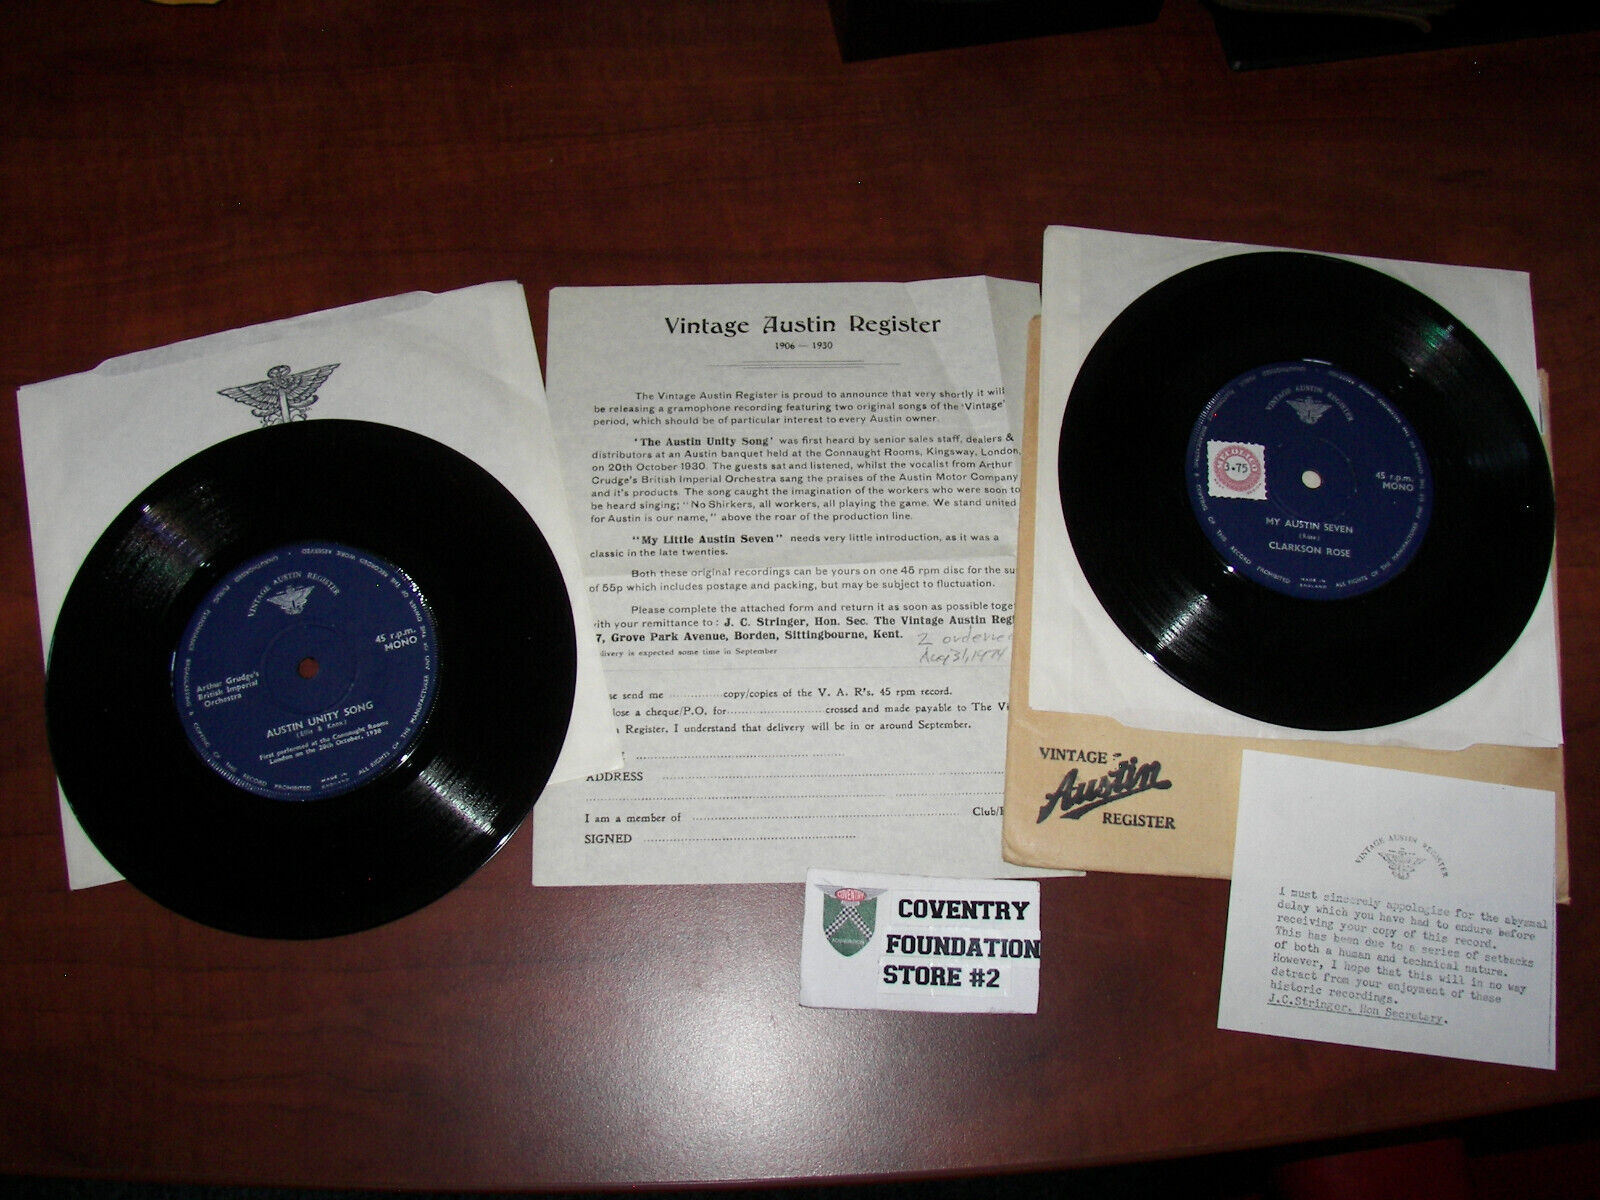 Rare Collectible Vintage Austin Register 45 Discs w/ Accompanying Memorabilia